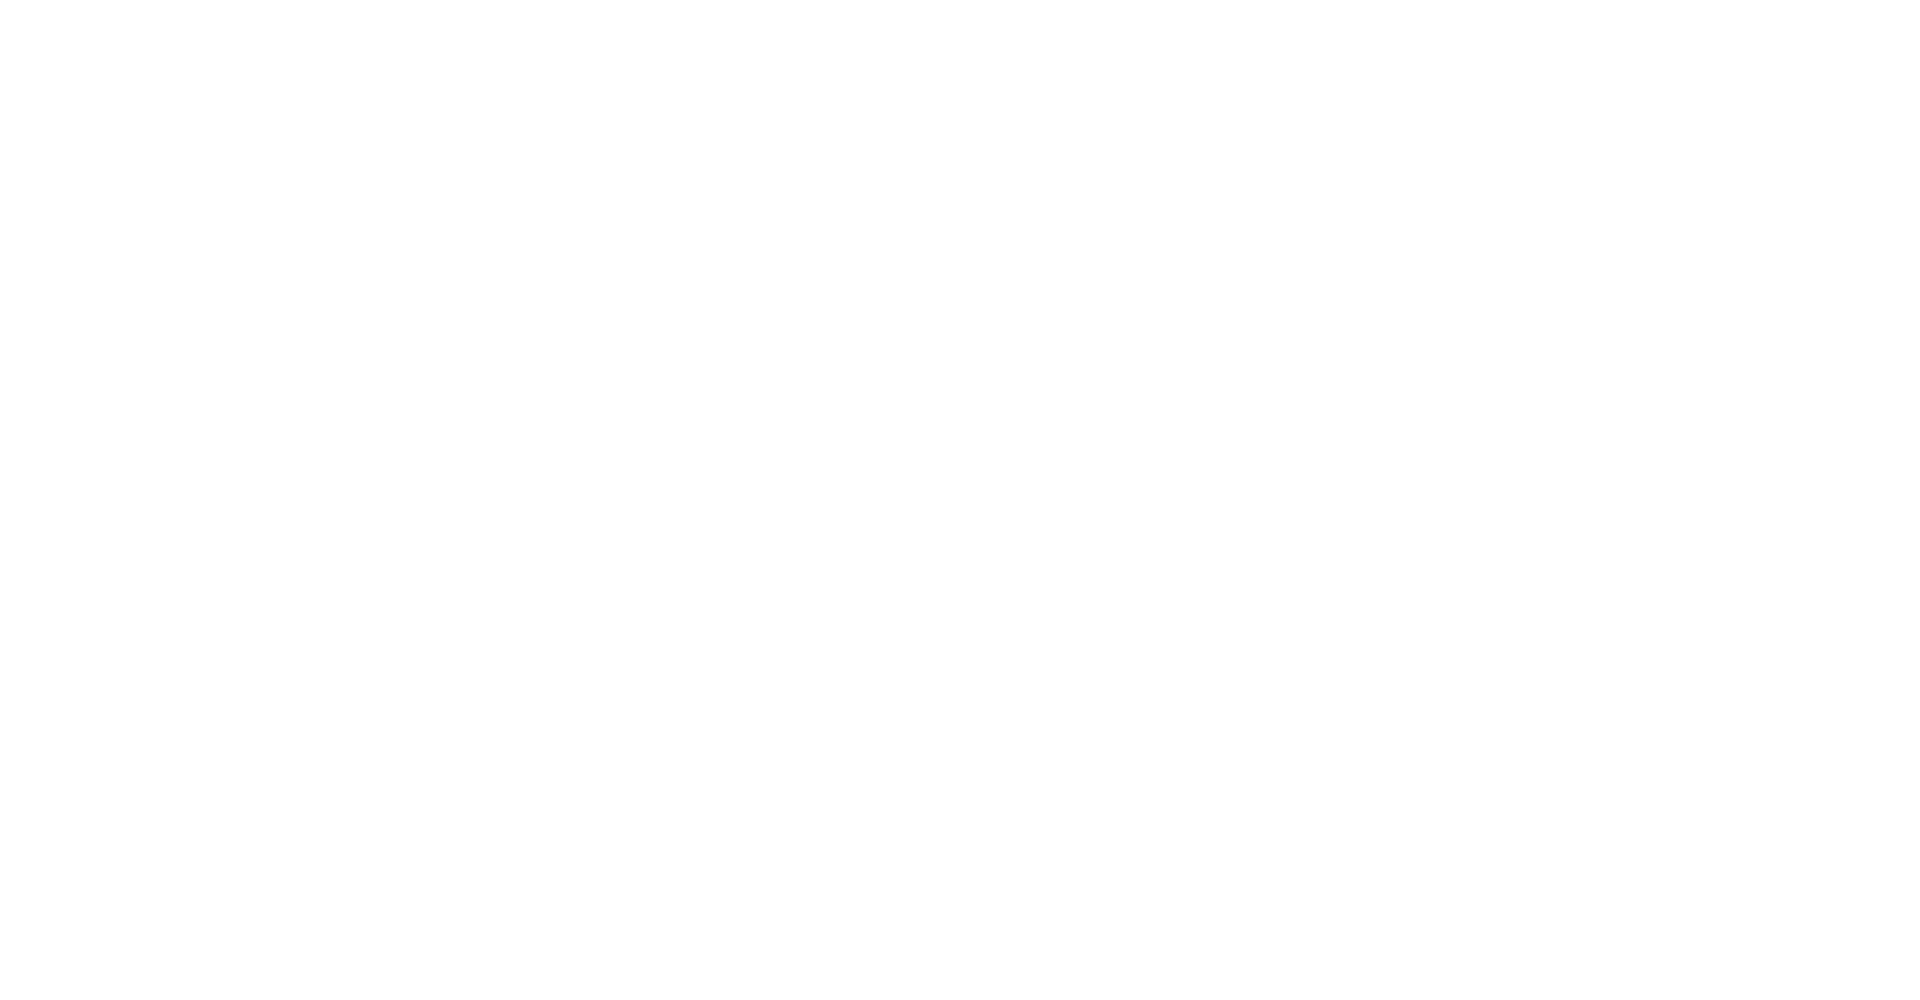 Kolaya.vn